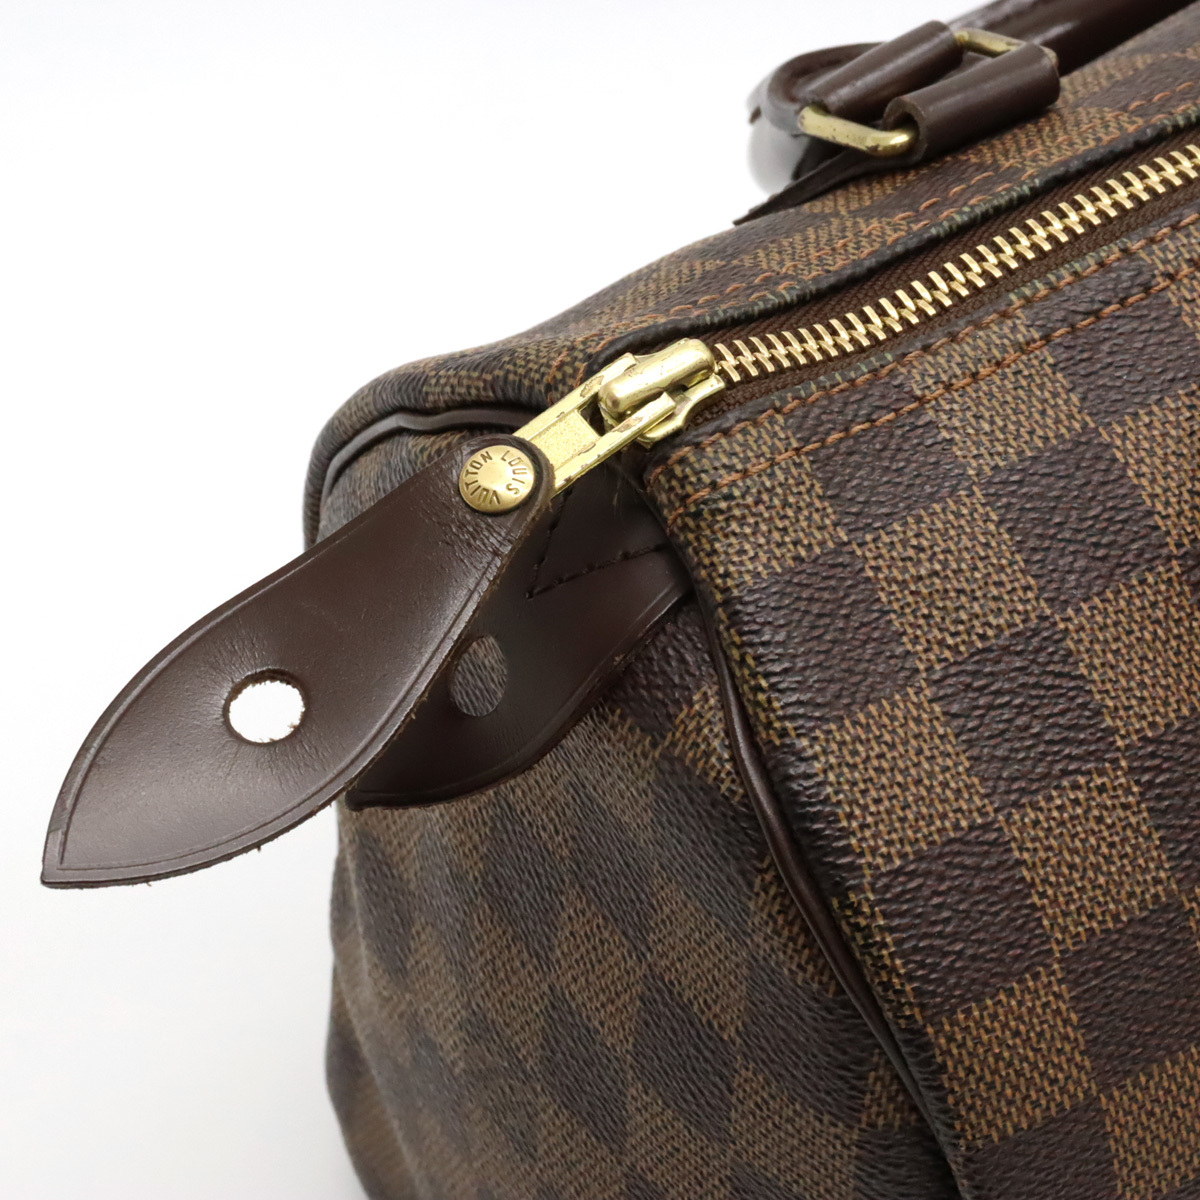 LOUIS VUITTON Louis Vuitton Damier speedy 25 ручная сумочка Mini сумка "Boston bag" 